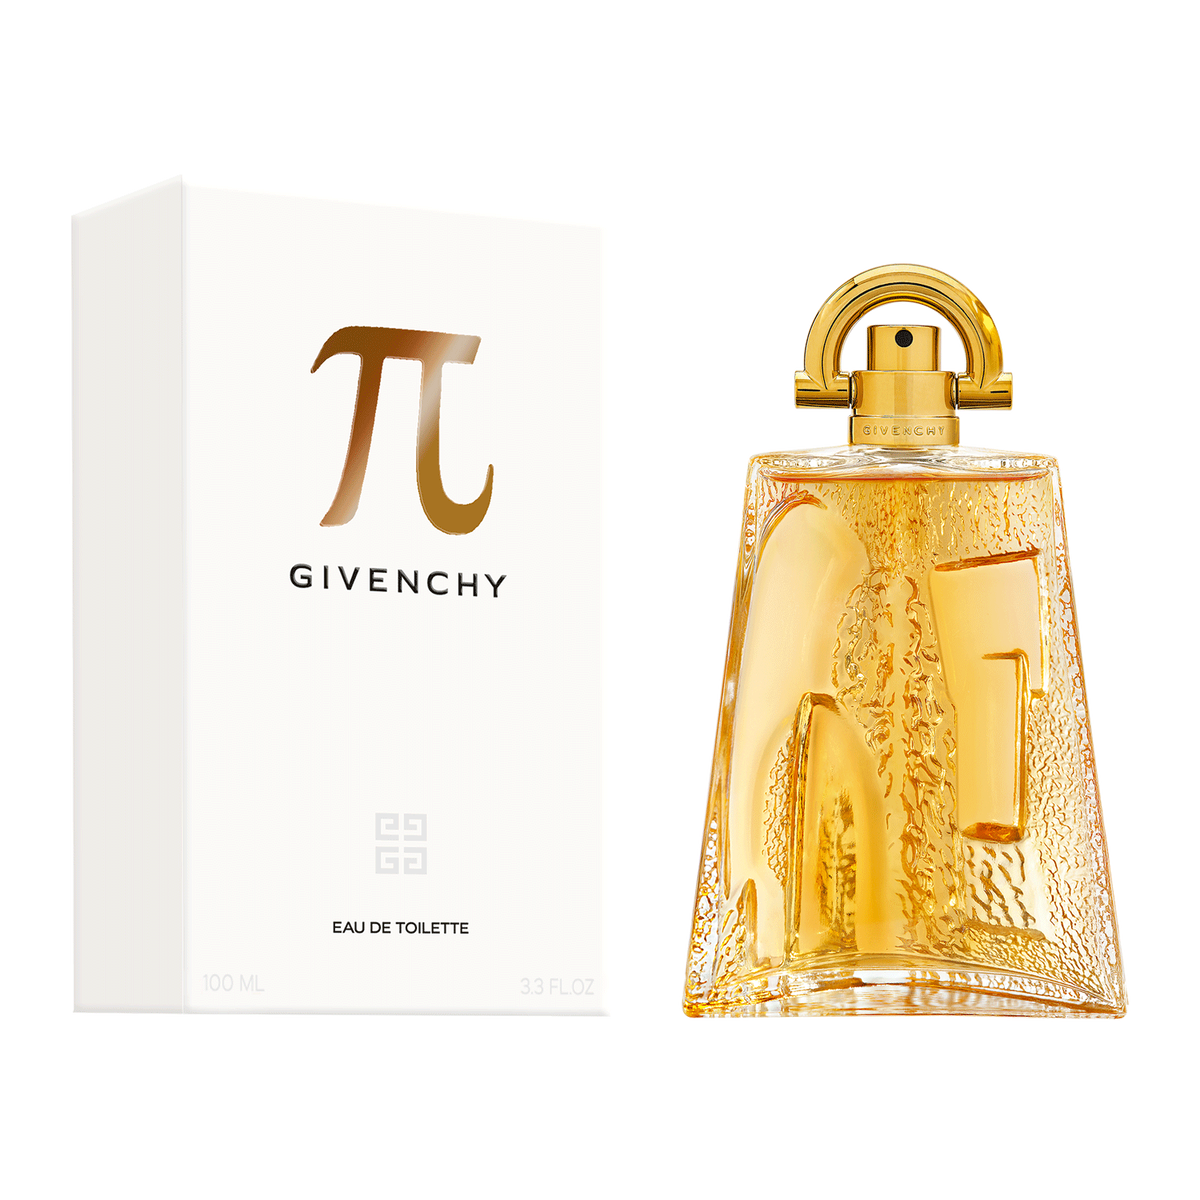 PI by Givenchy Eau de Toilette Spray (Tester) 3.4 oz (Men)